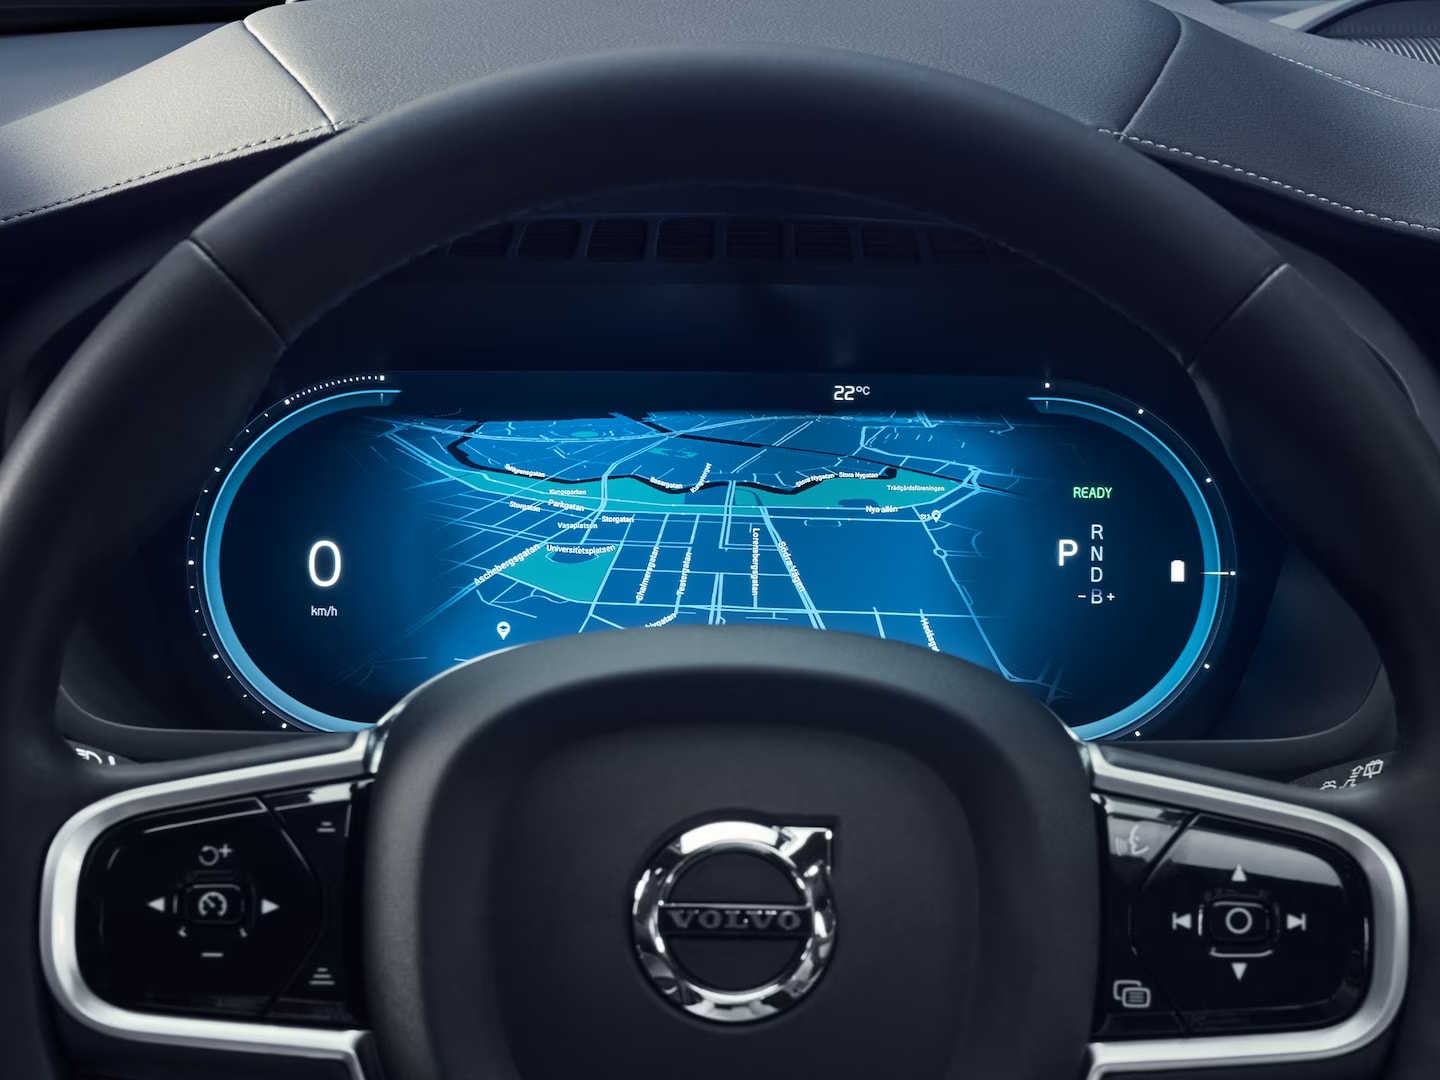 Driver information display behind the steering wheel of the Volvo XC90 plug-in hybrid.